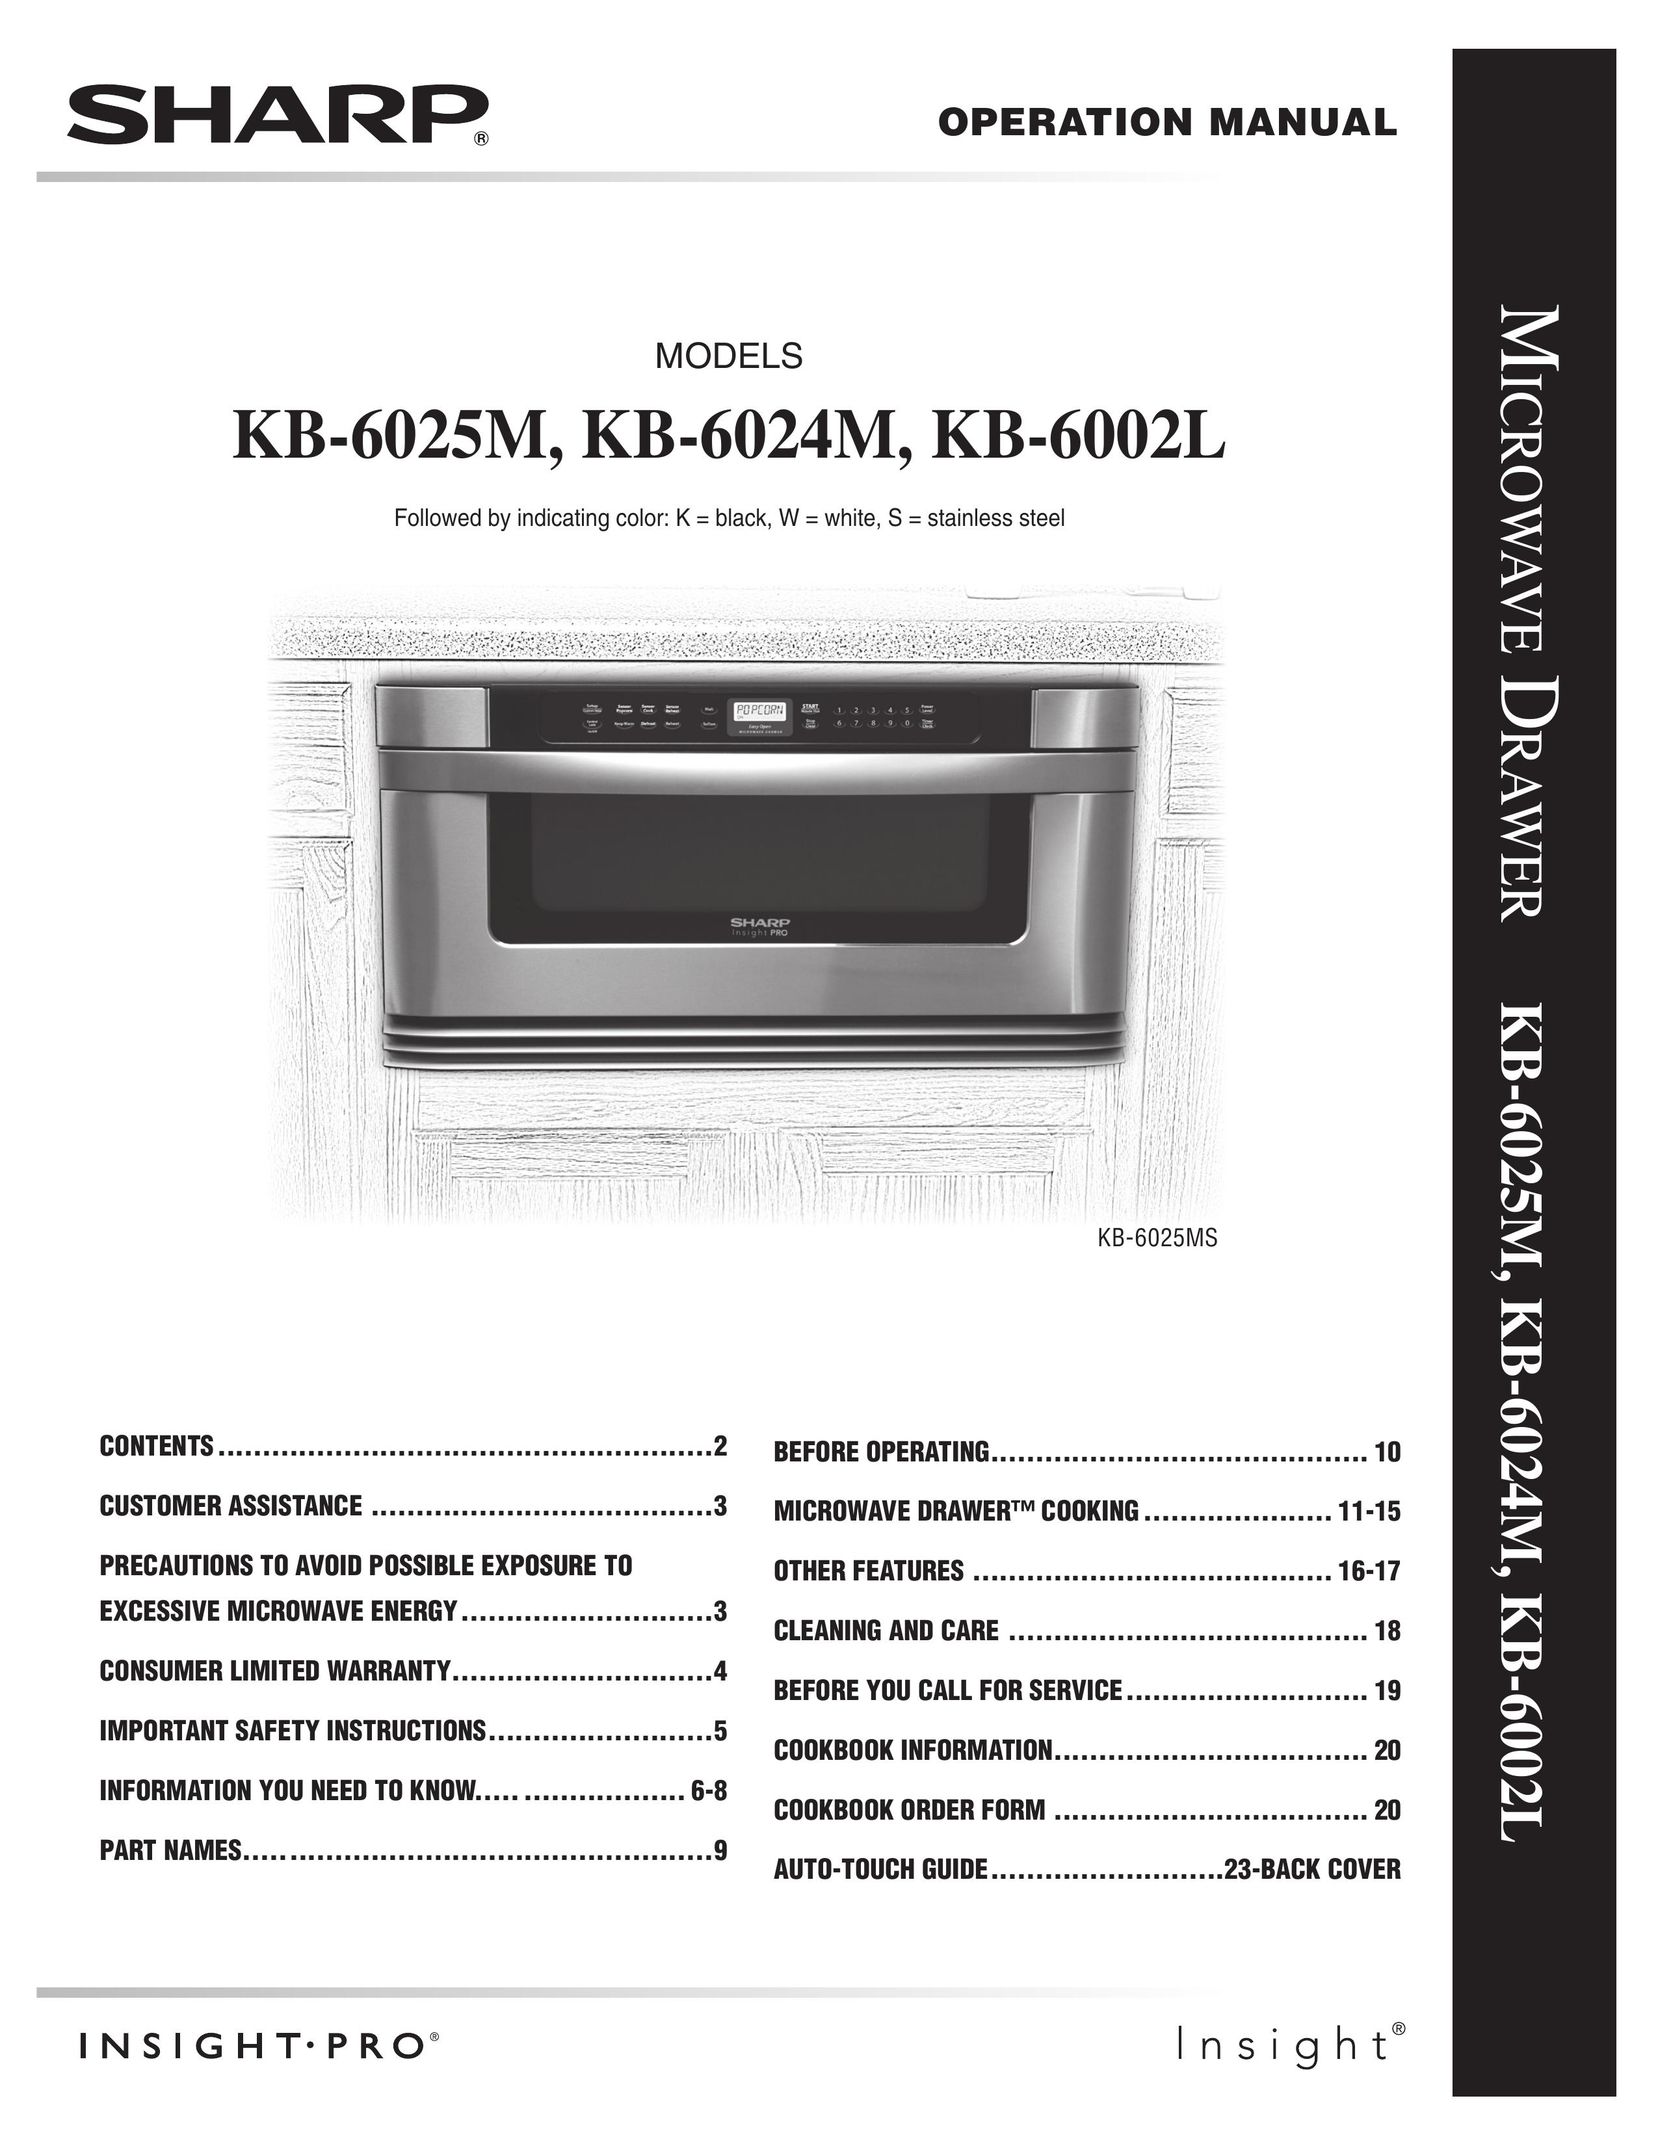 Sharp KB-6025M Microwave Oven User Manual